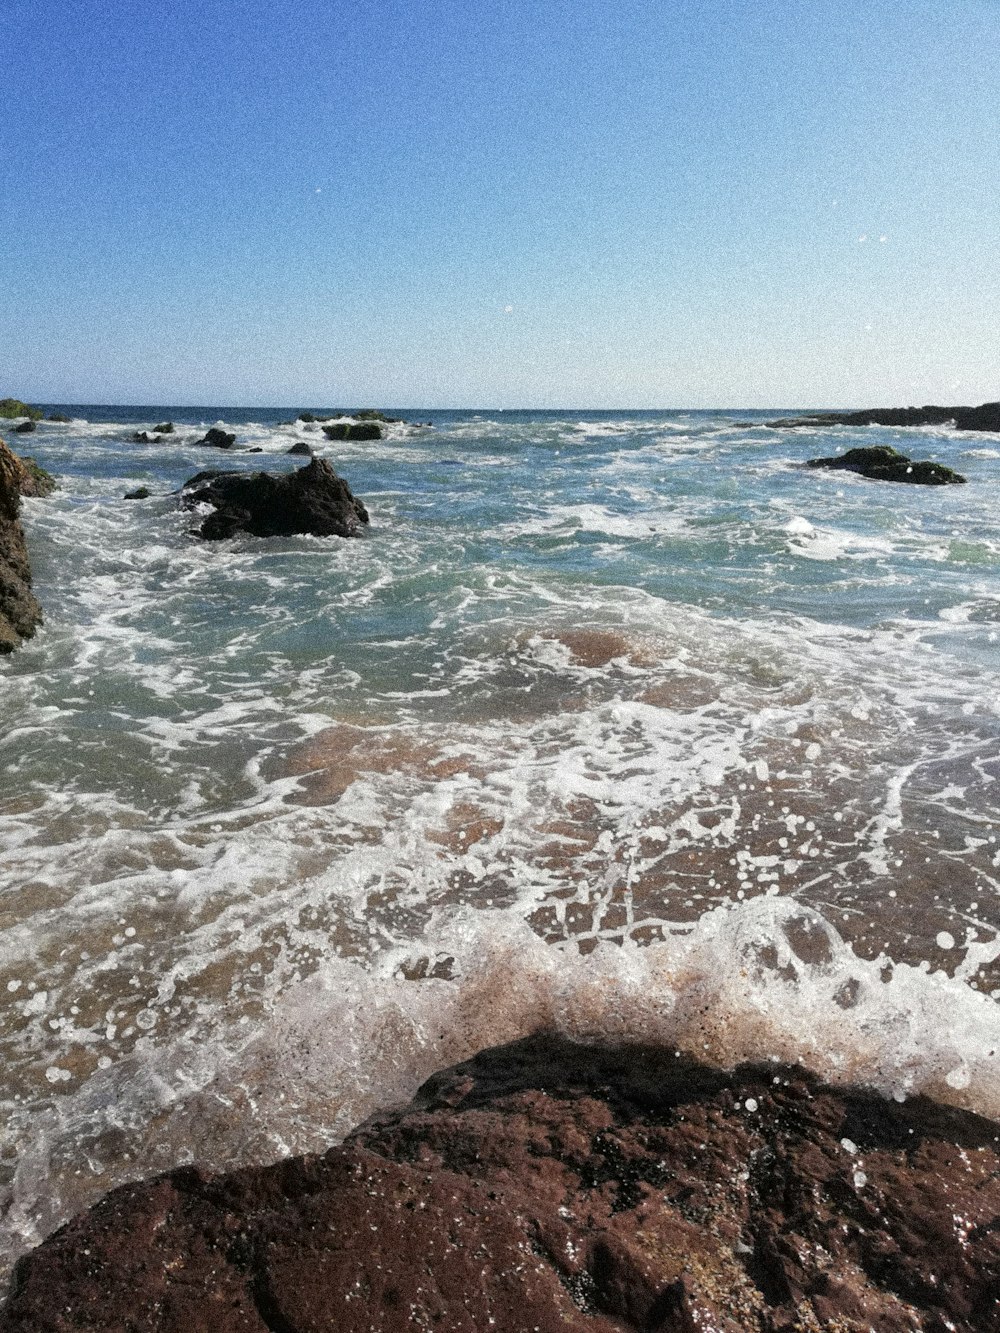 sea waves crashing on brown rock formation under blue sky during daytime